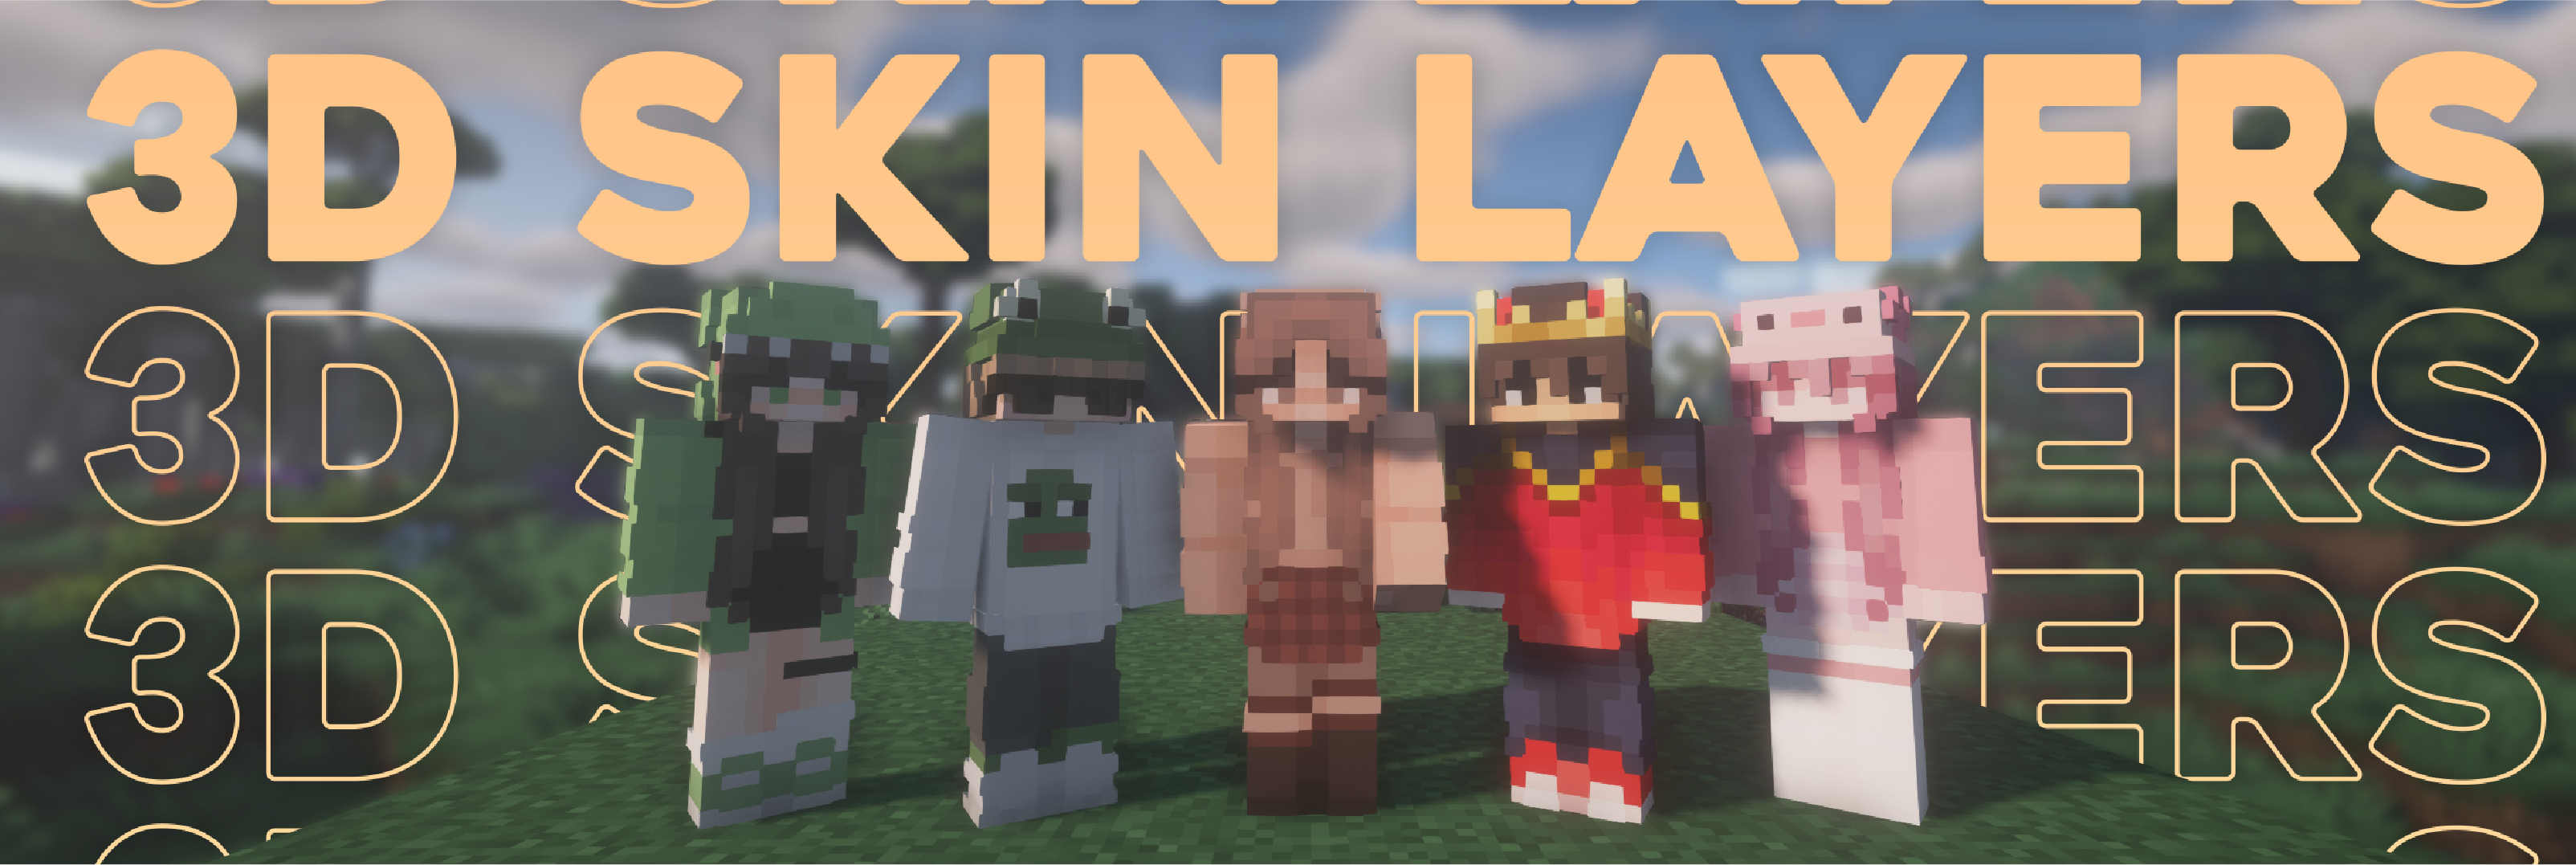 3D Skin Layers - Minecraft Mod